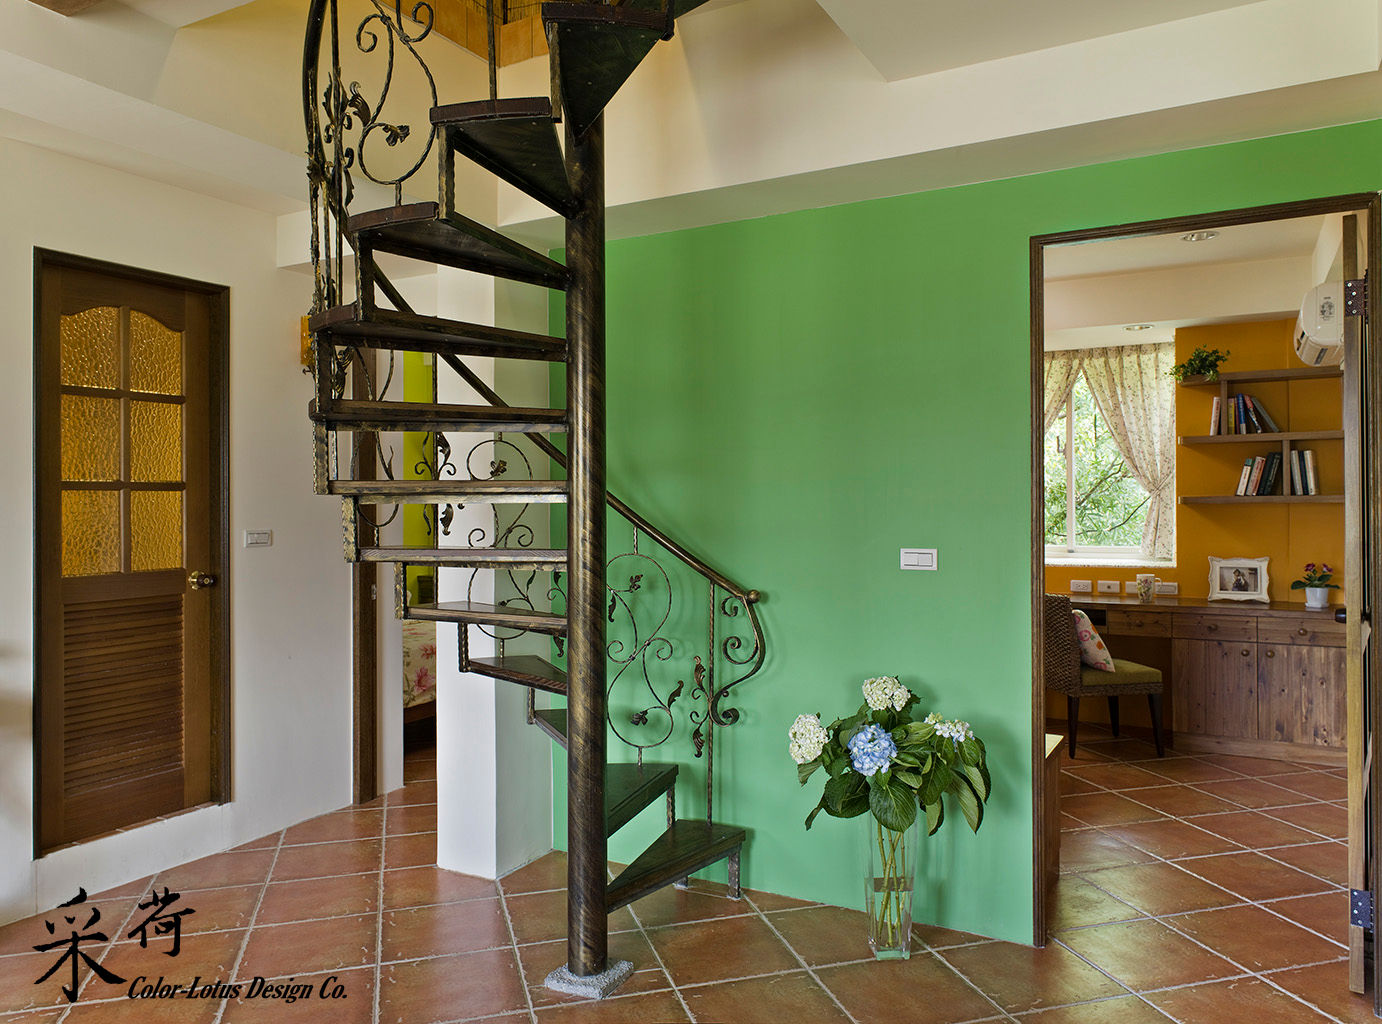 雙溪山居-鄉村風格, Color-Lotus Design Color-Lotus Design Stairs Metal Stairs